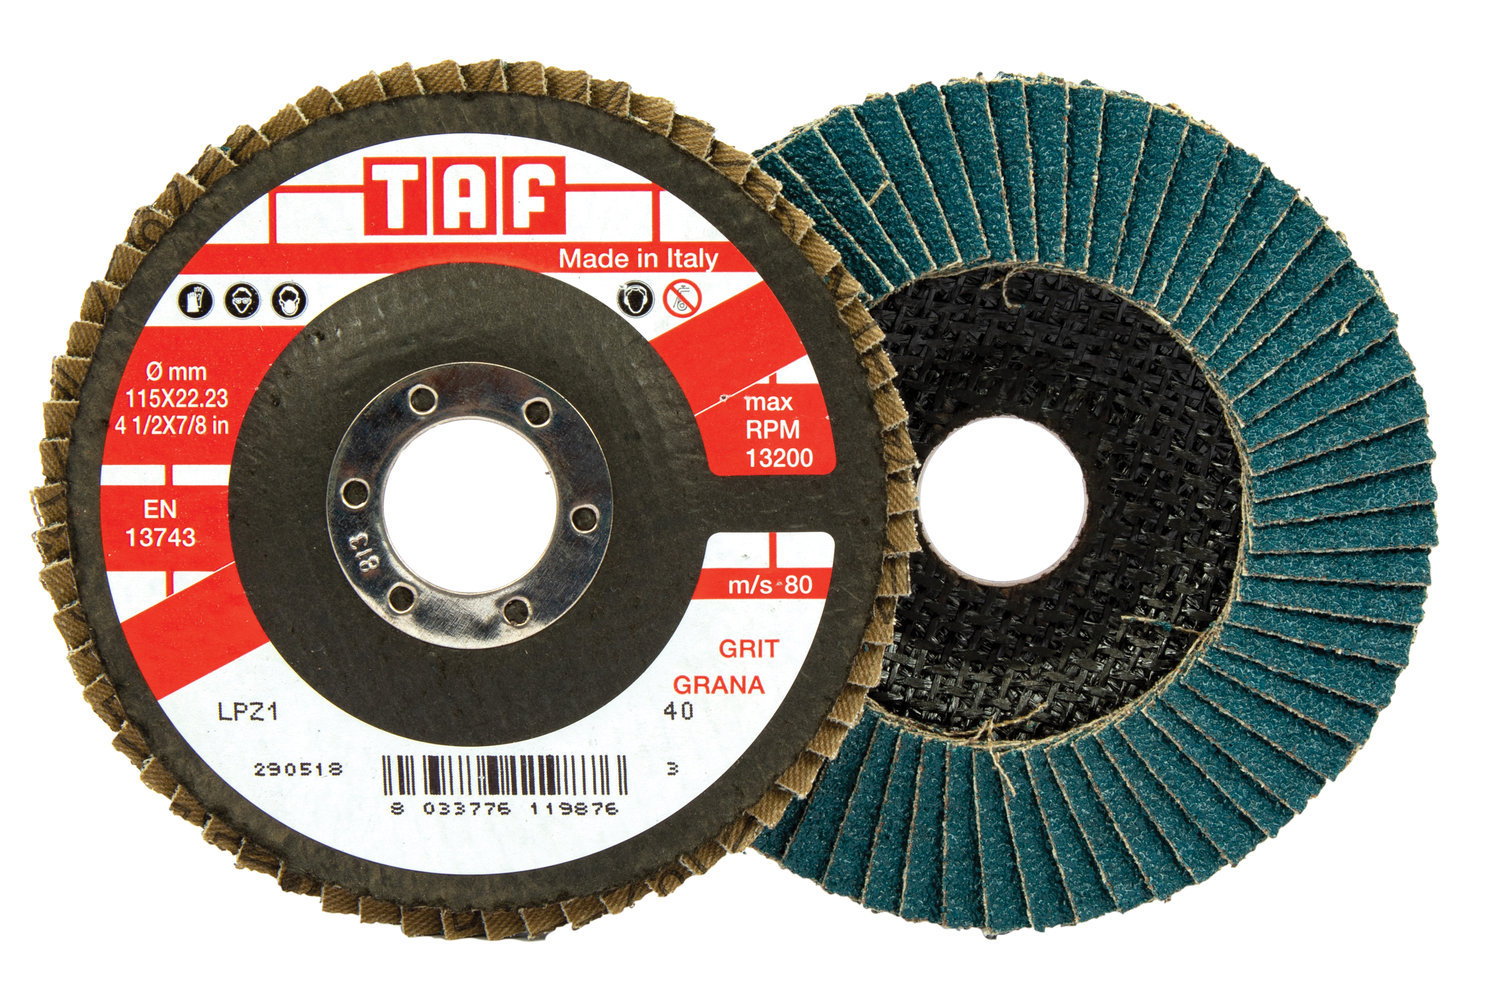 40 Grit AES Industries 7722-40 2 Blue Zirconia Rolok Flap Discs Extra Coarse 12 Pack 